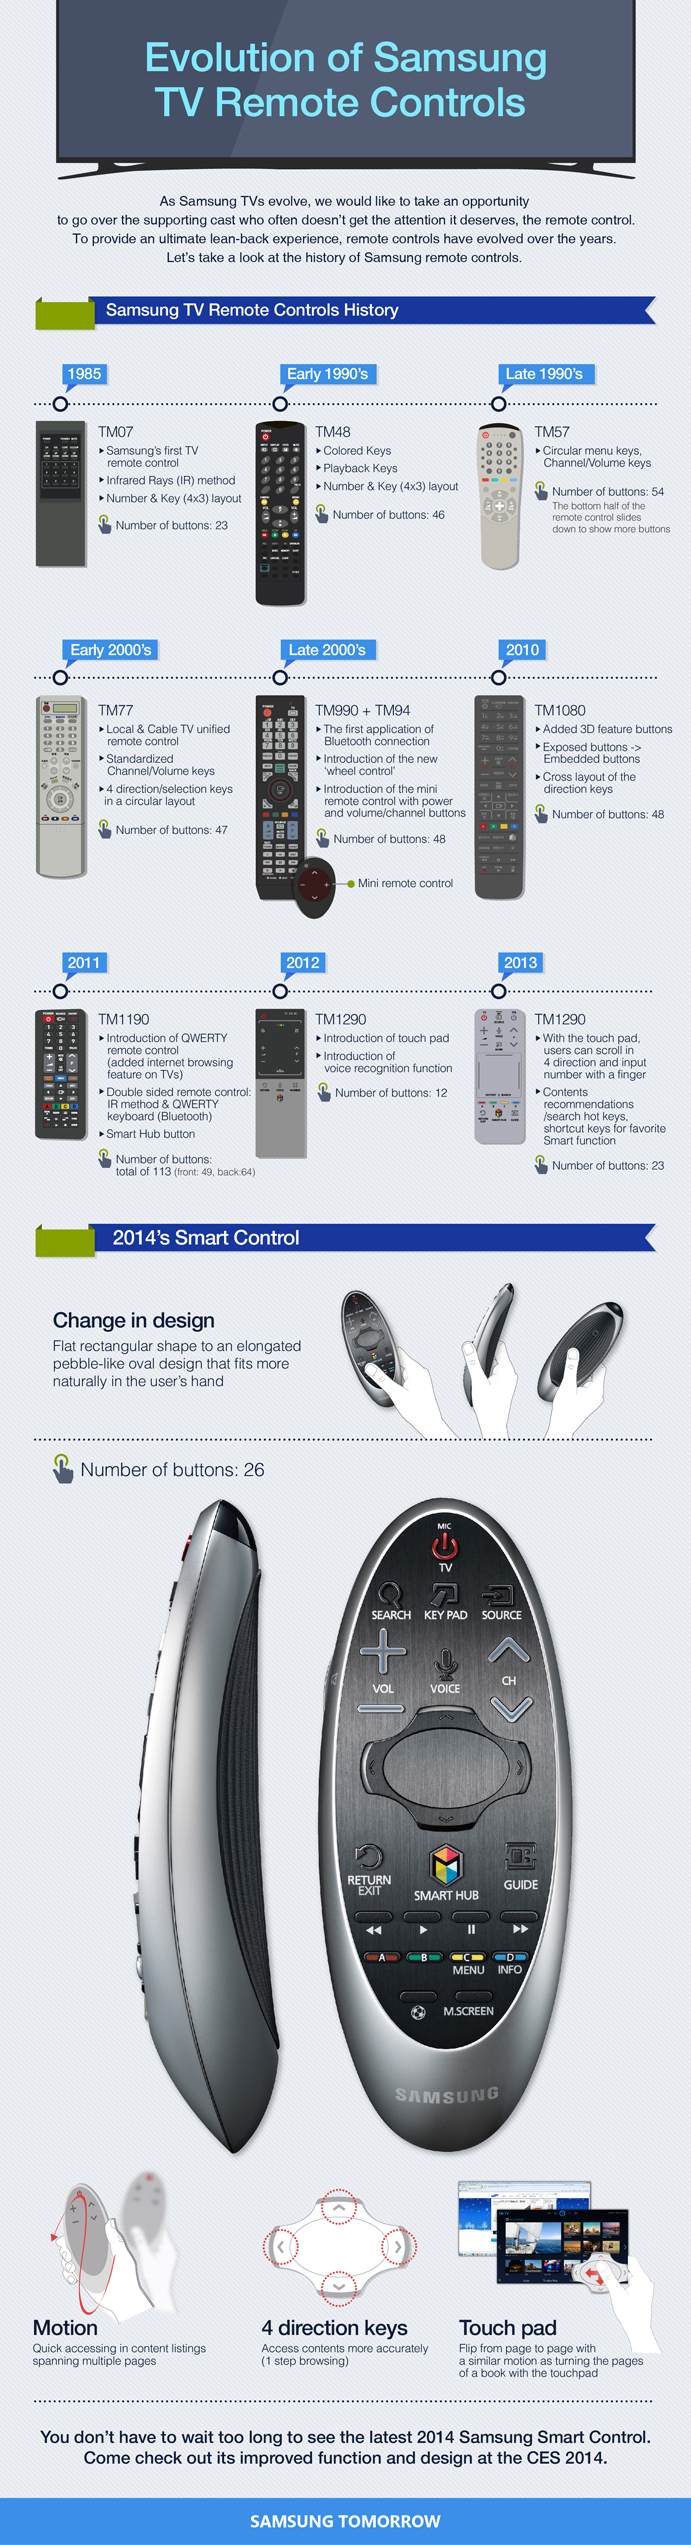 Evolution of Samsung TV Remote Controls